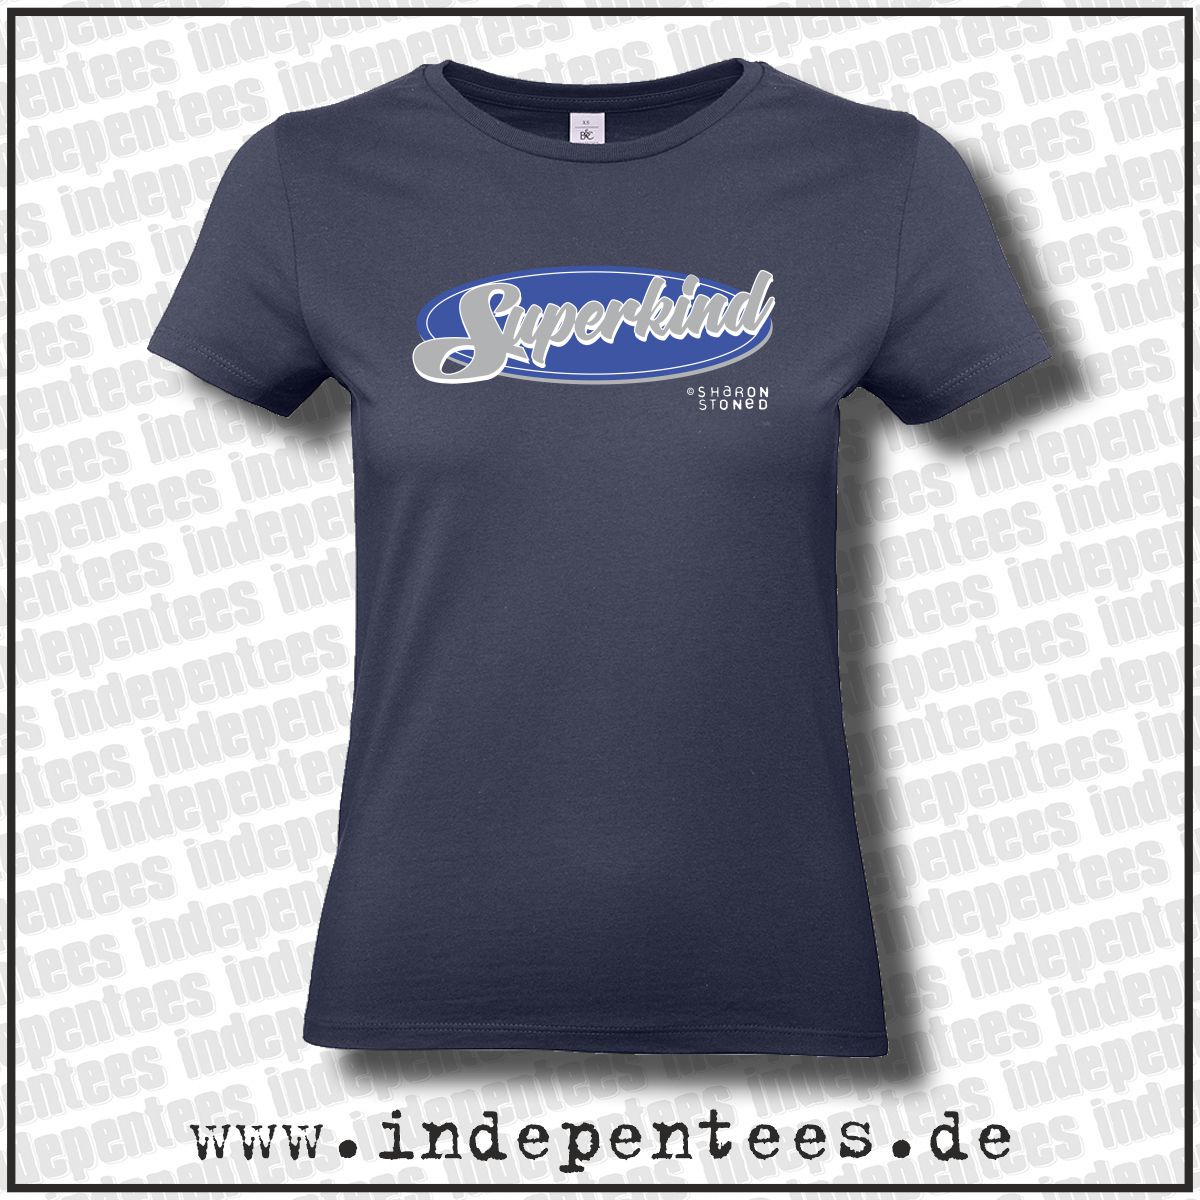 Sharon Stoned | Superkind